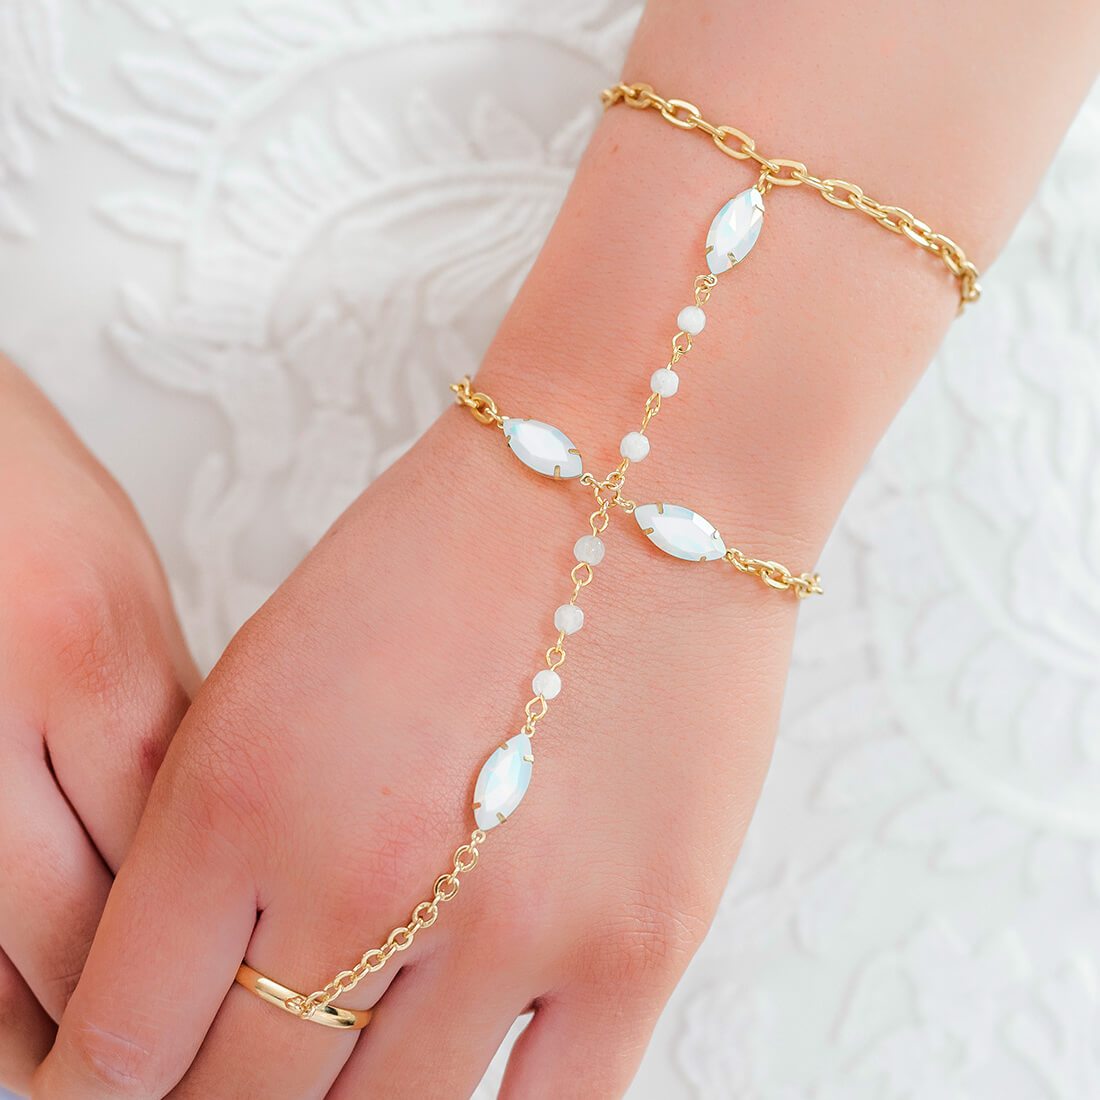 Gold Tallulah White Opal Hand Chain Bracelet from front